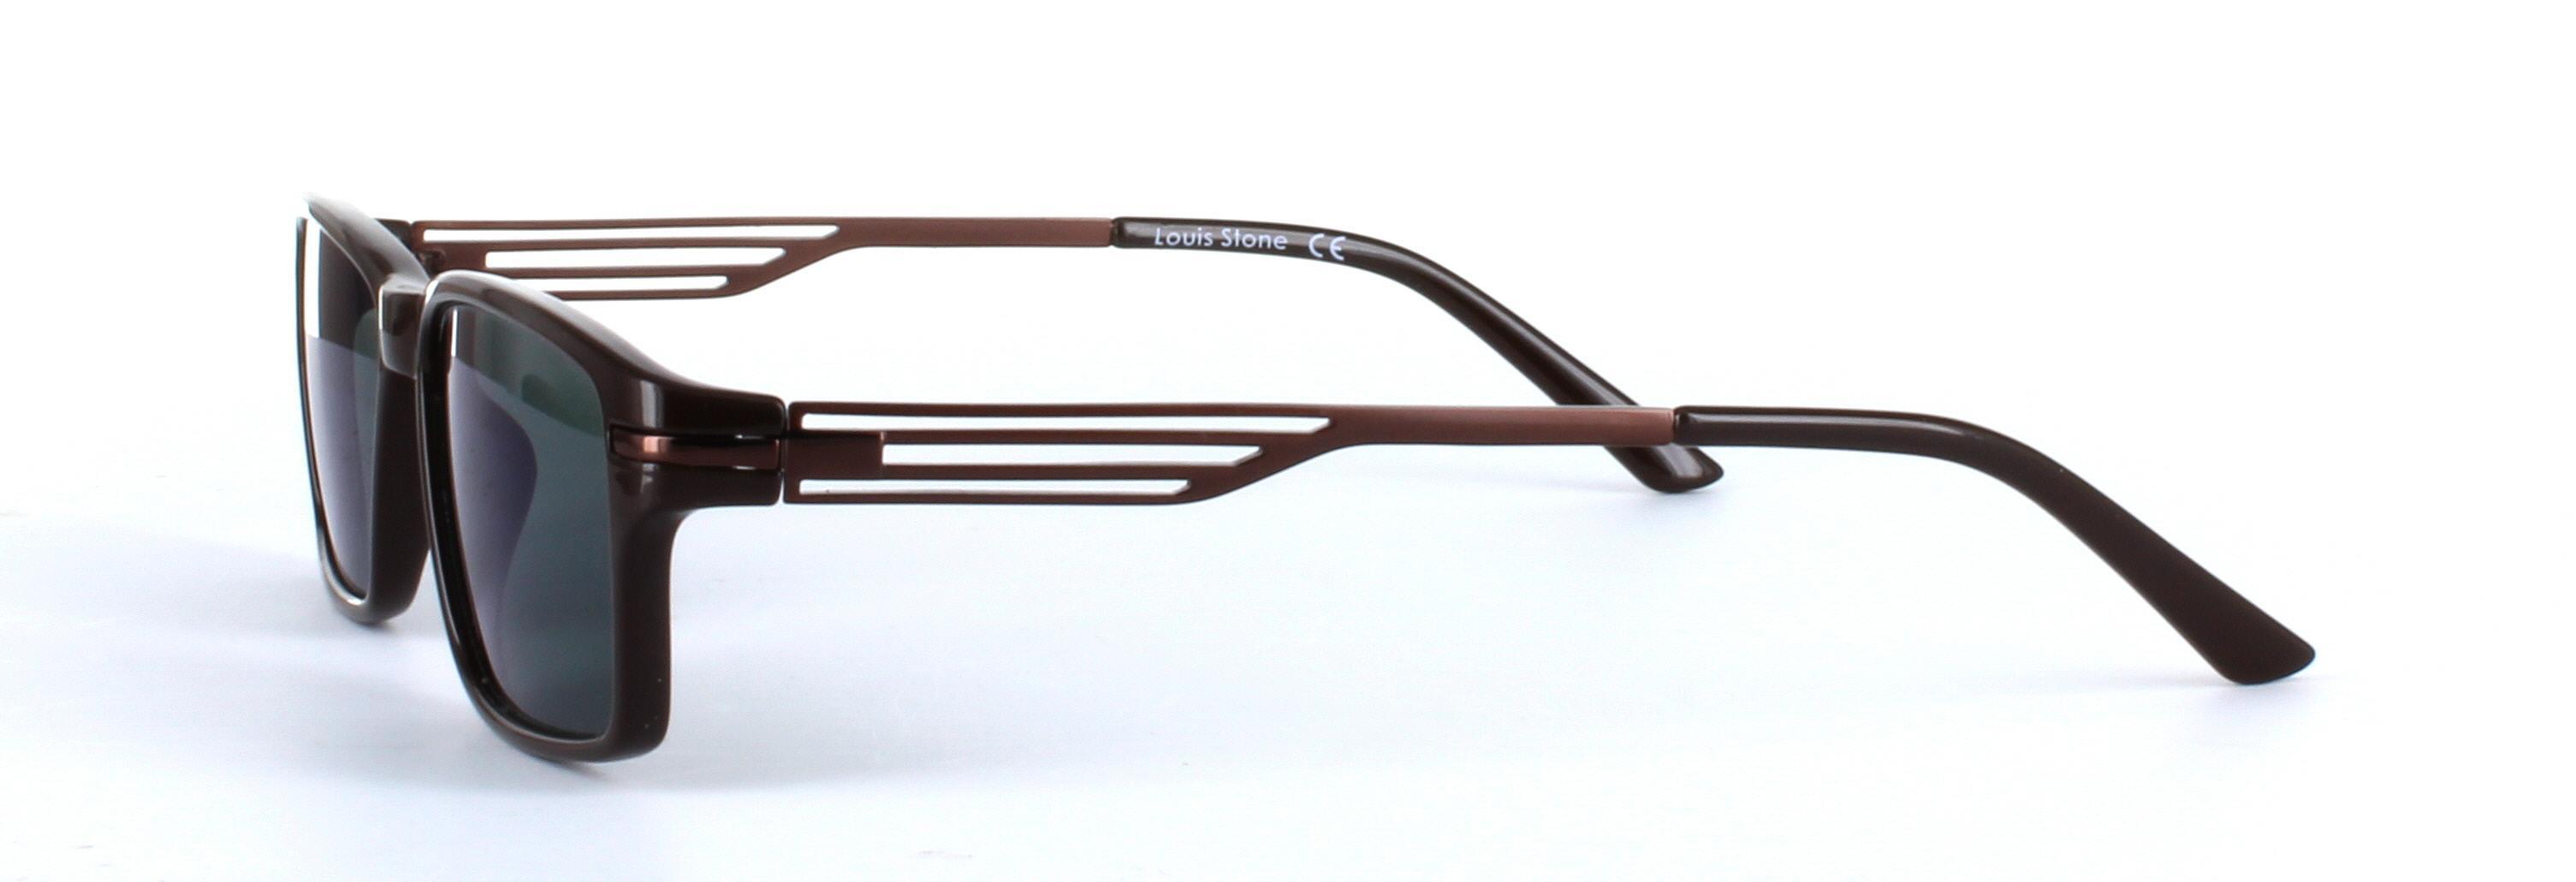 Boston Brown Full Rim Rectangular Plastic Sunglasses - Image View 2